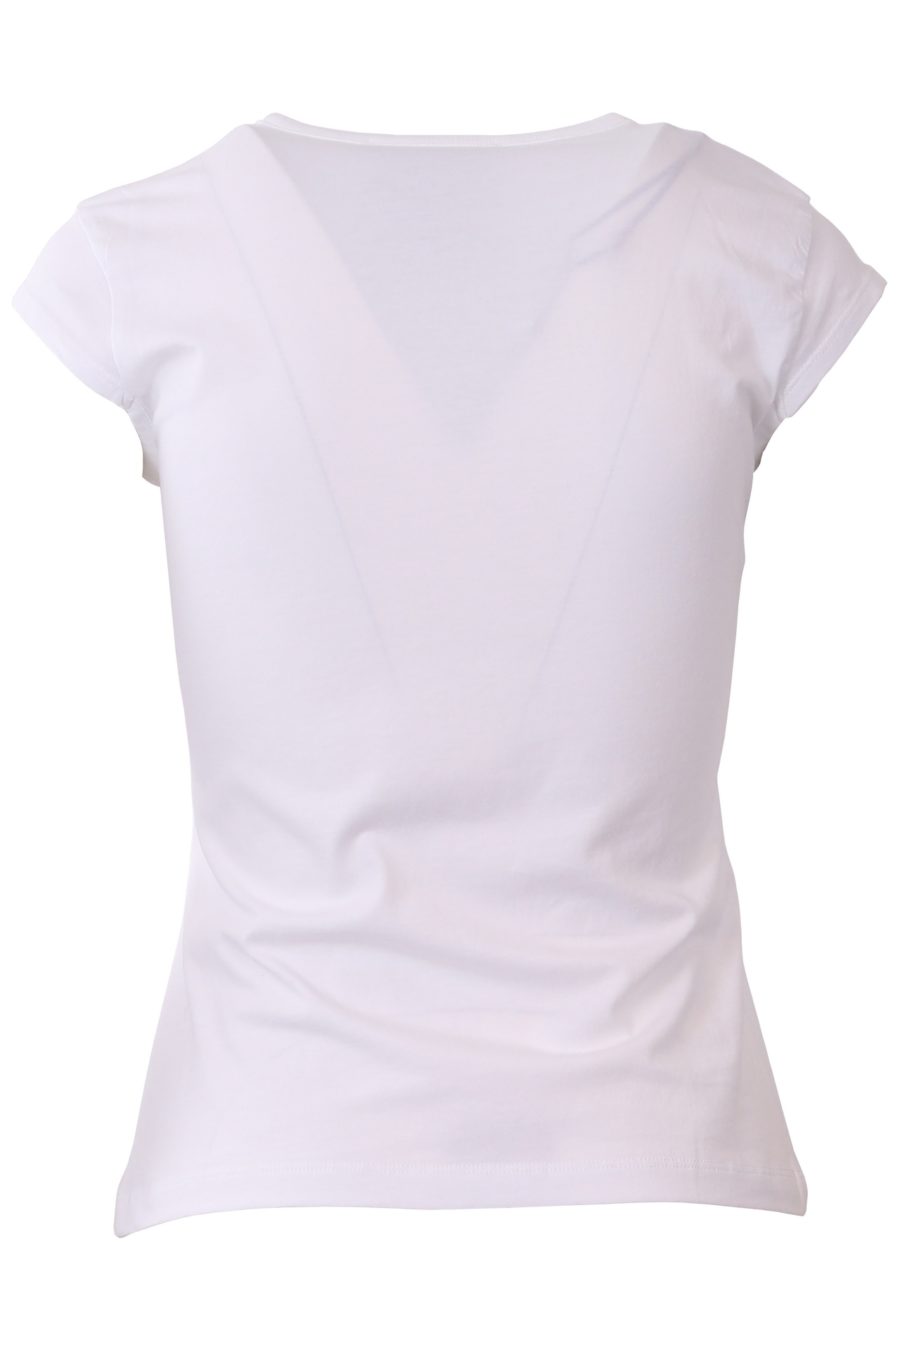 Moschino Couture T-shirt blanc avec ours italien - cb6df7e9e6bcd90dbfb0ca36e76dcefd699a5030